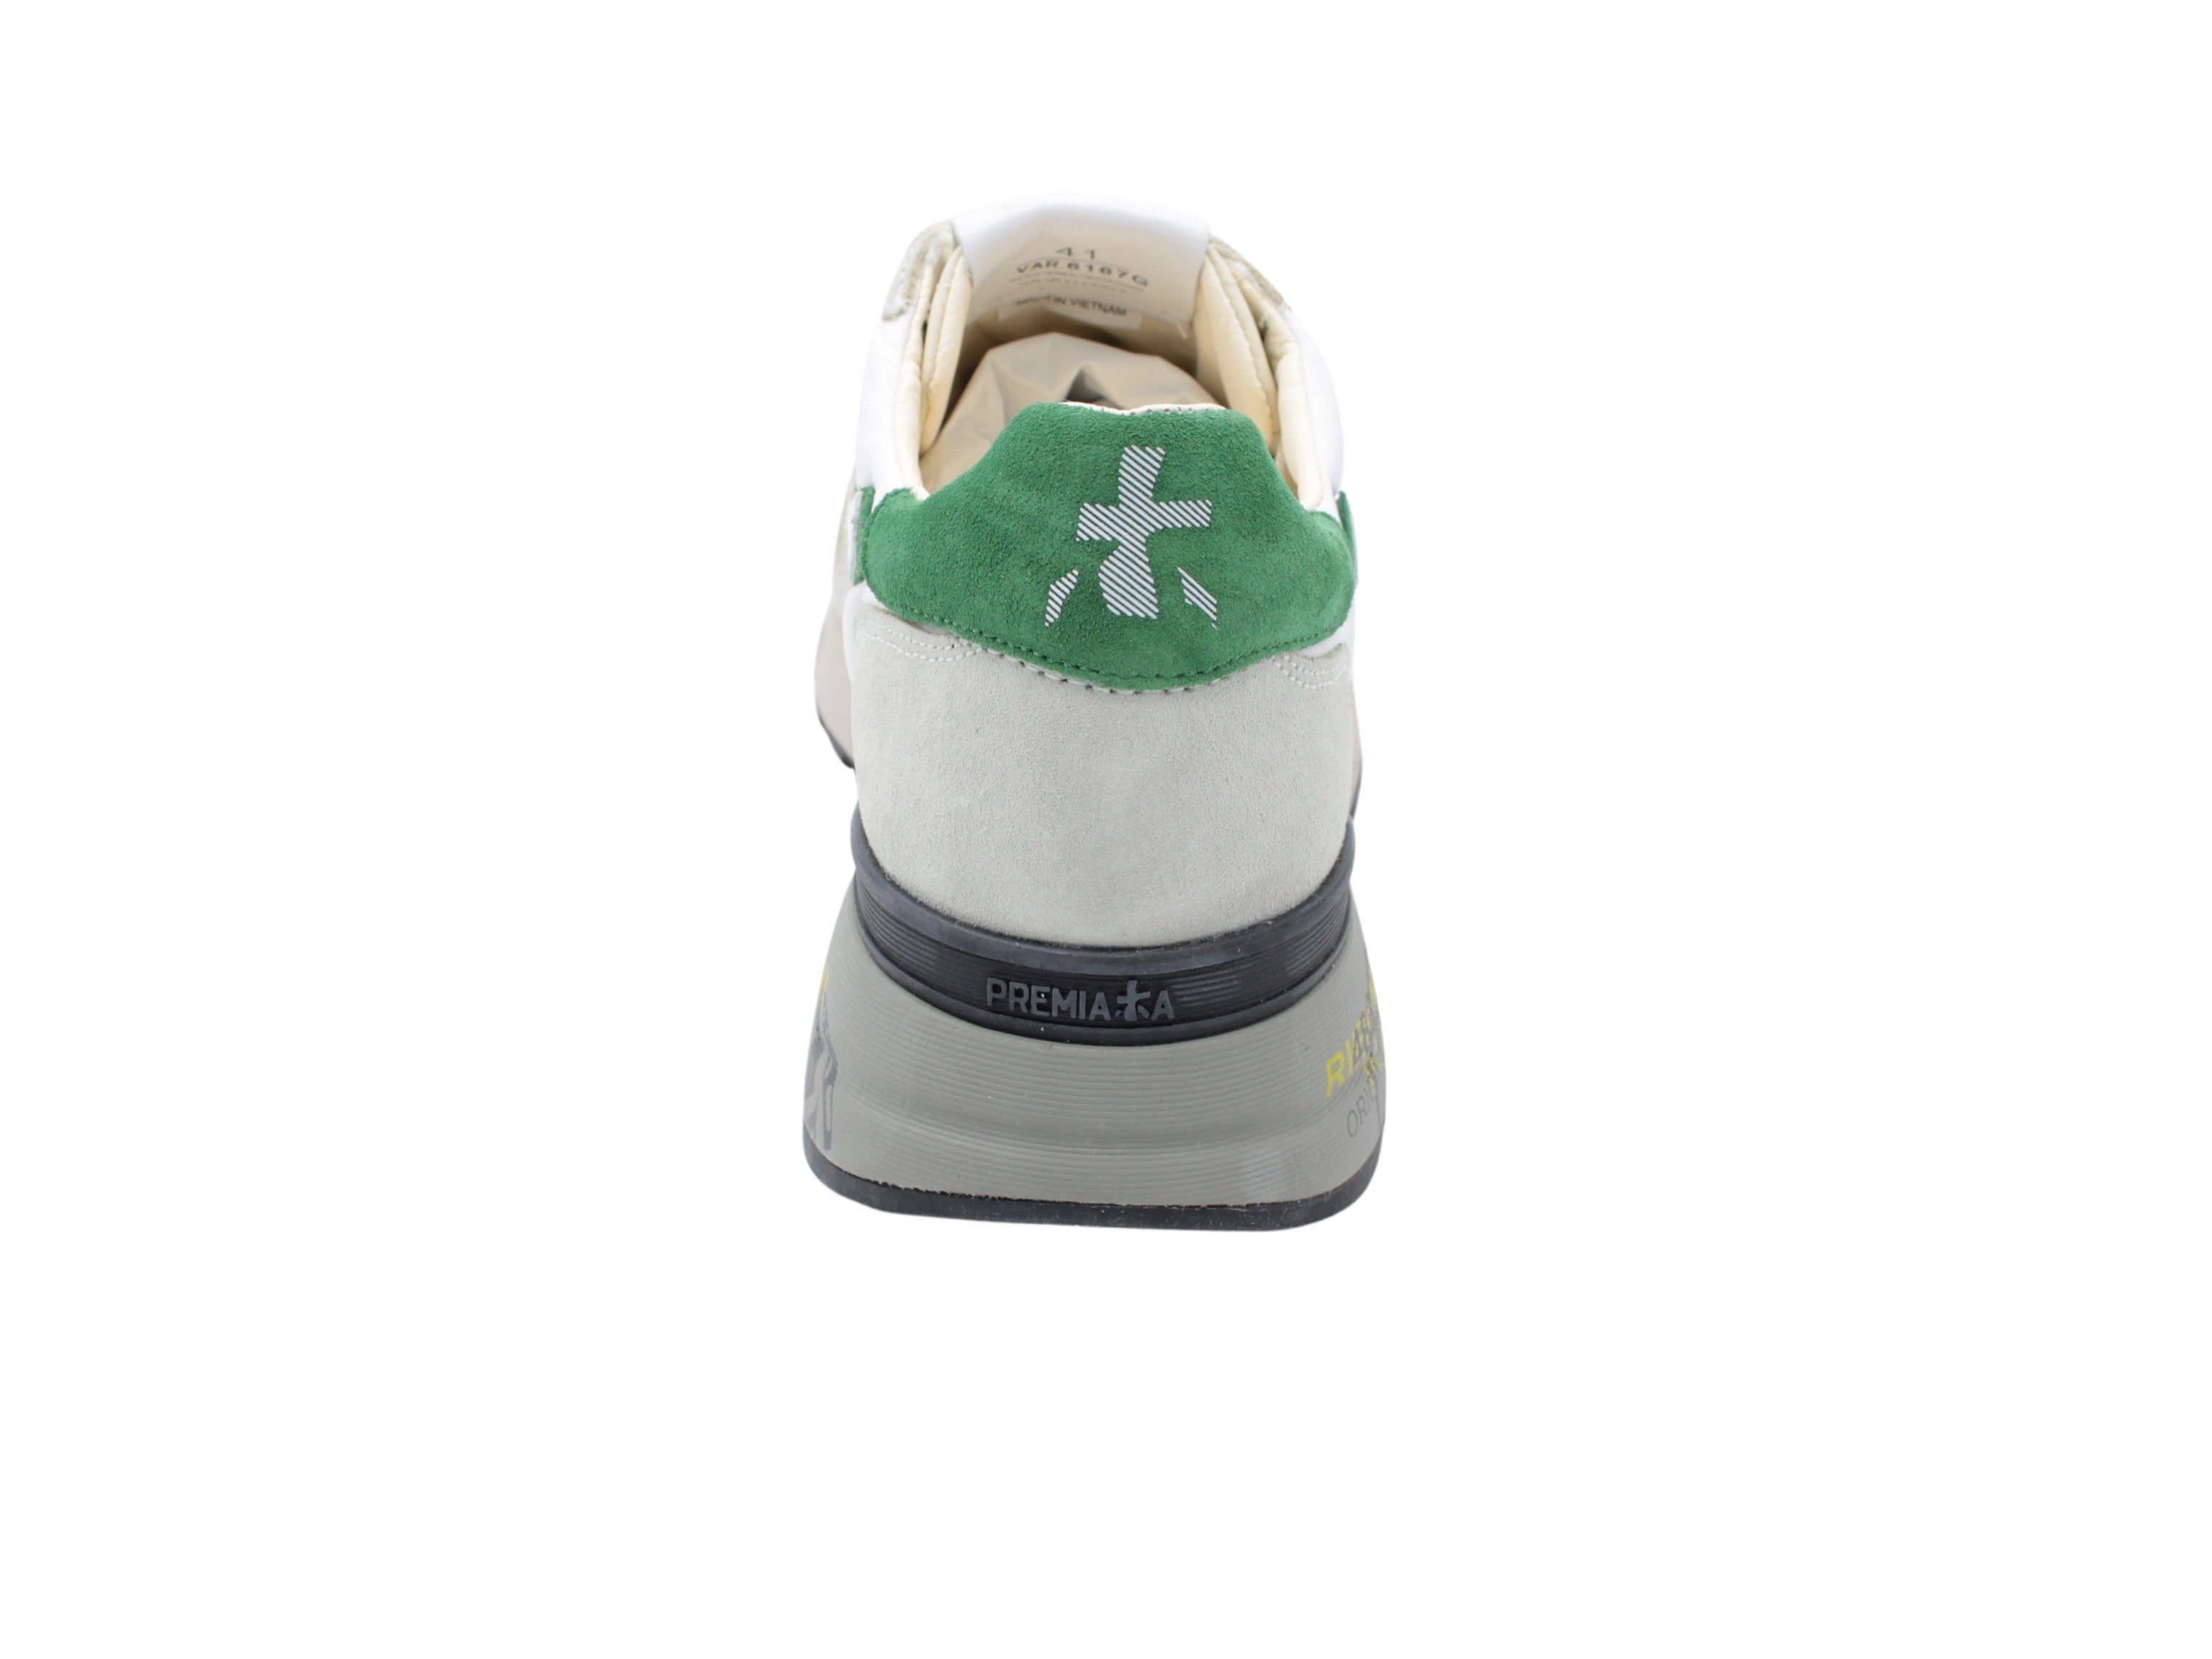 Mick 6167g white-green sneaker